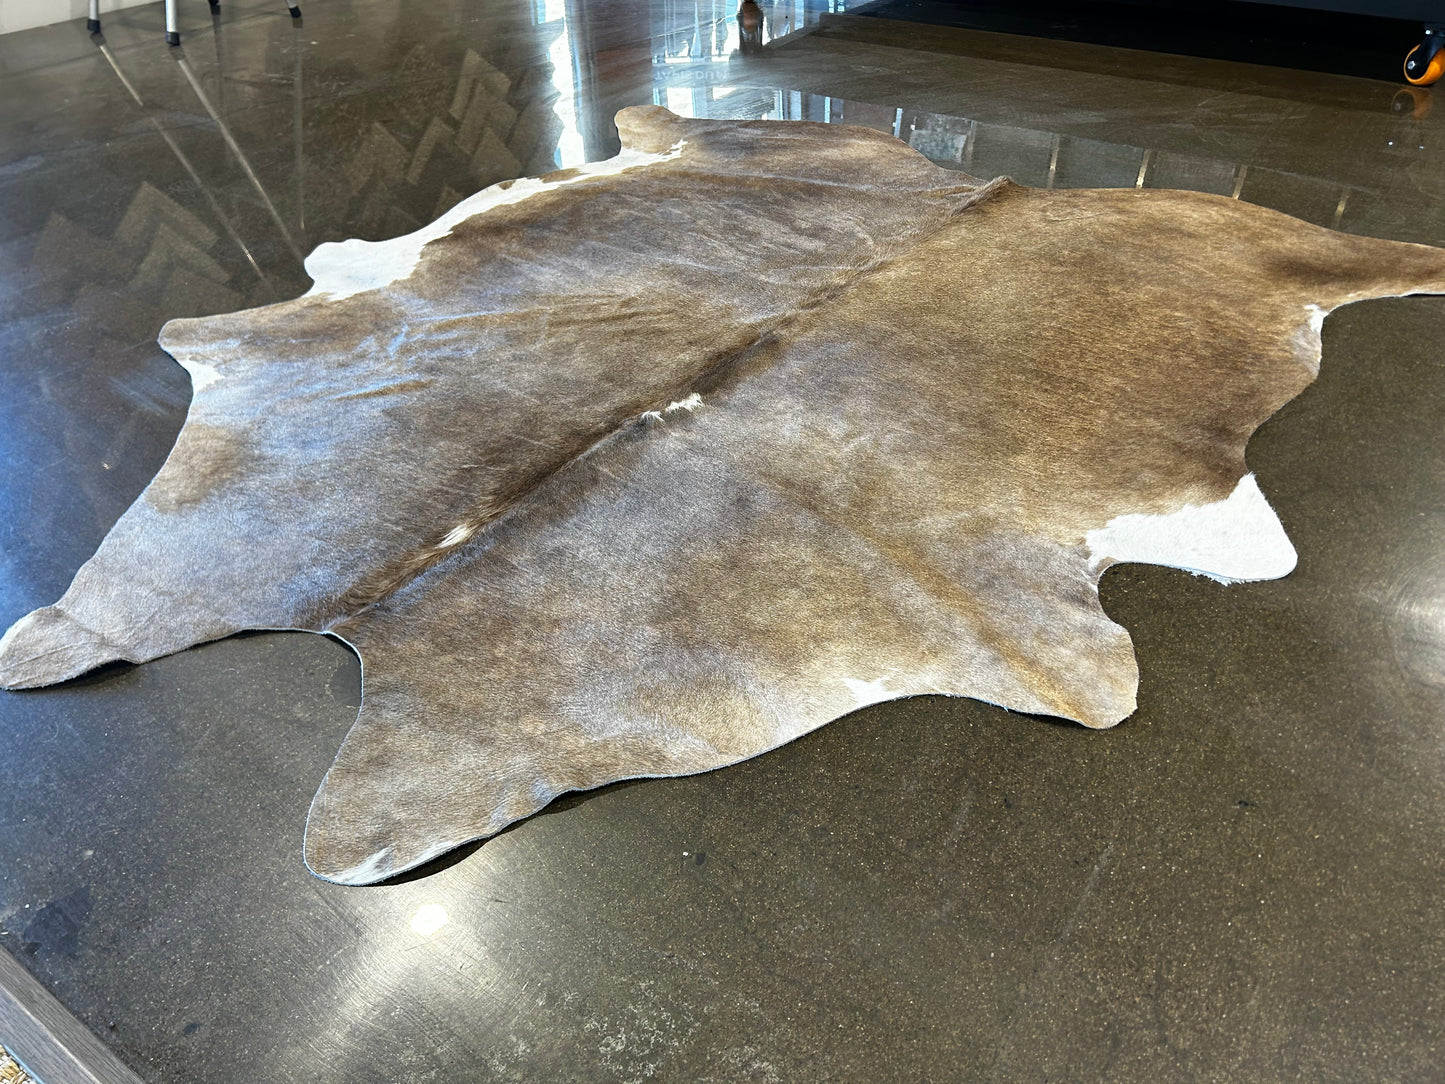 S-4: Cowhide rug - Medium brown and white